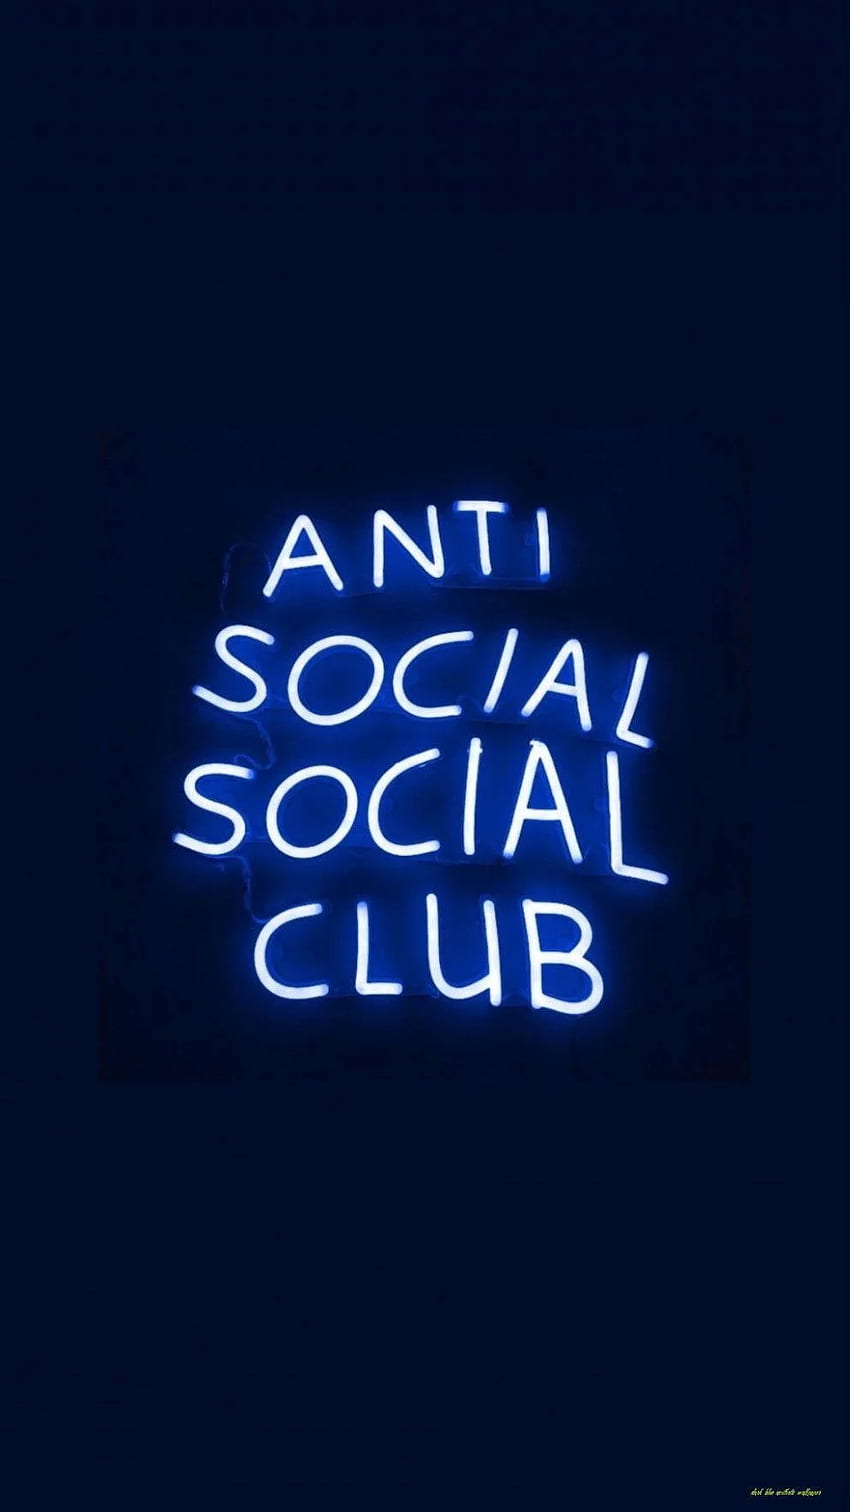 Anti social club neon sign - Dark blue, navy blue